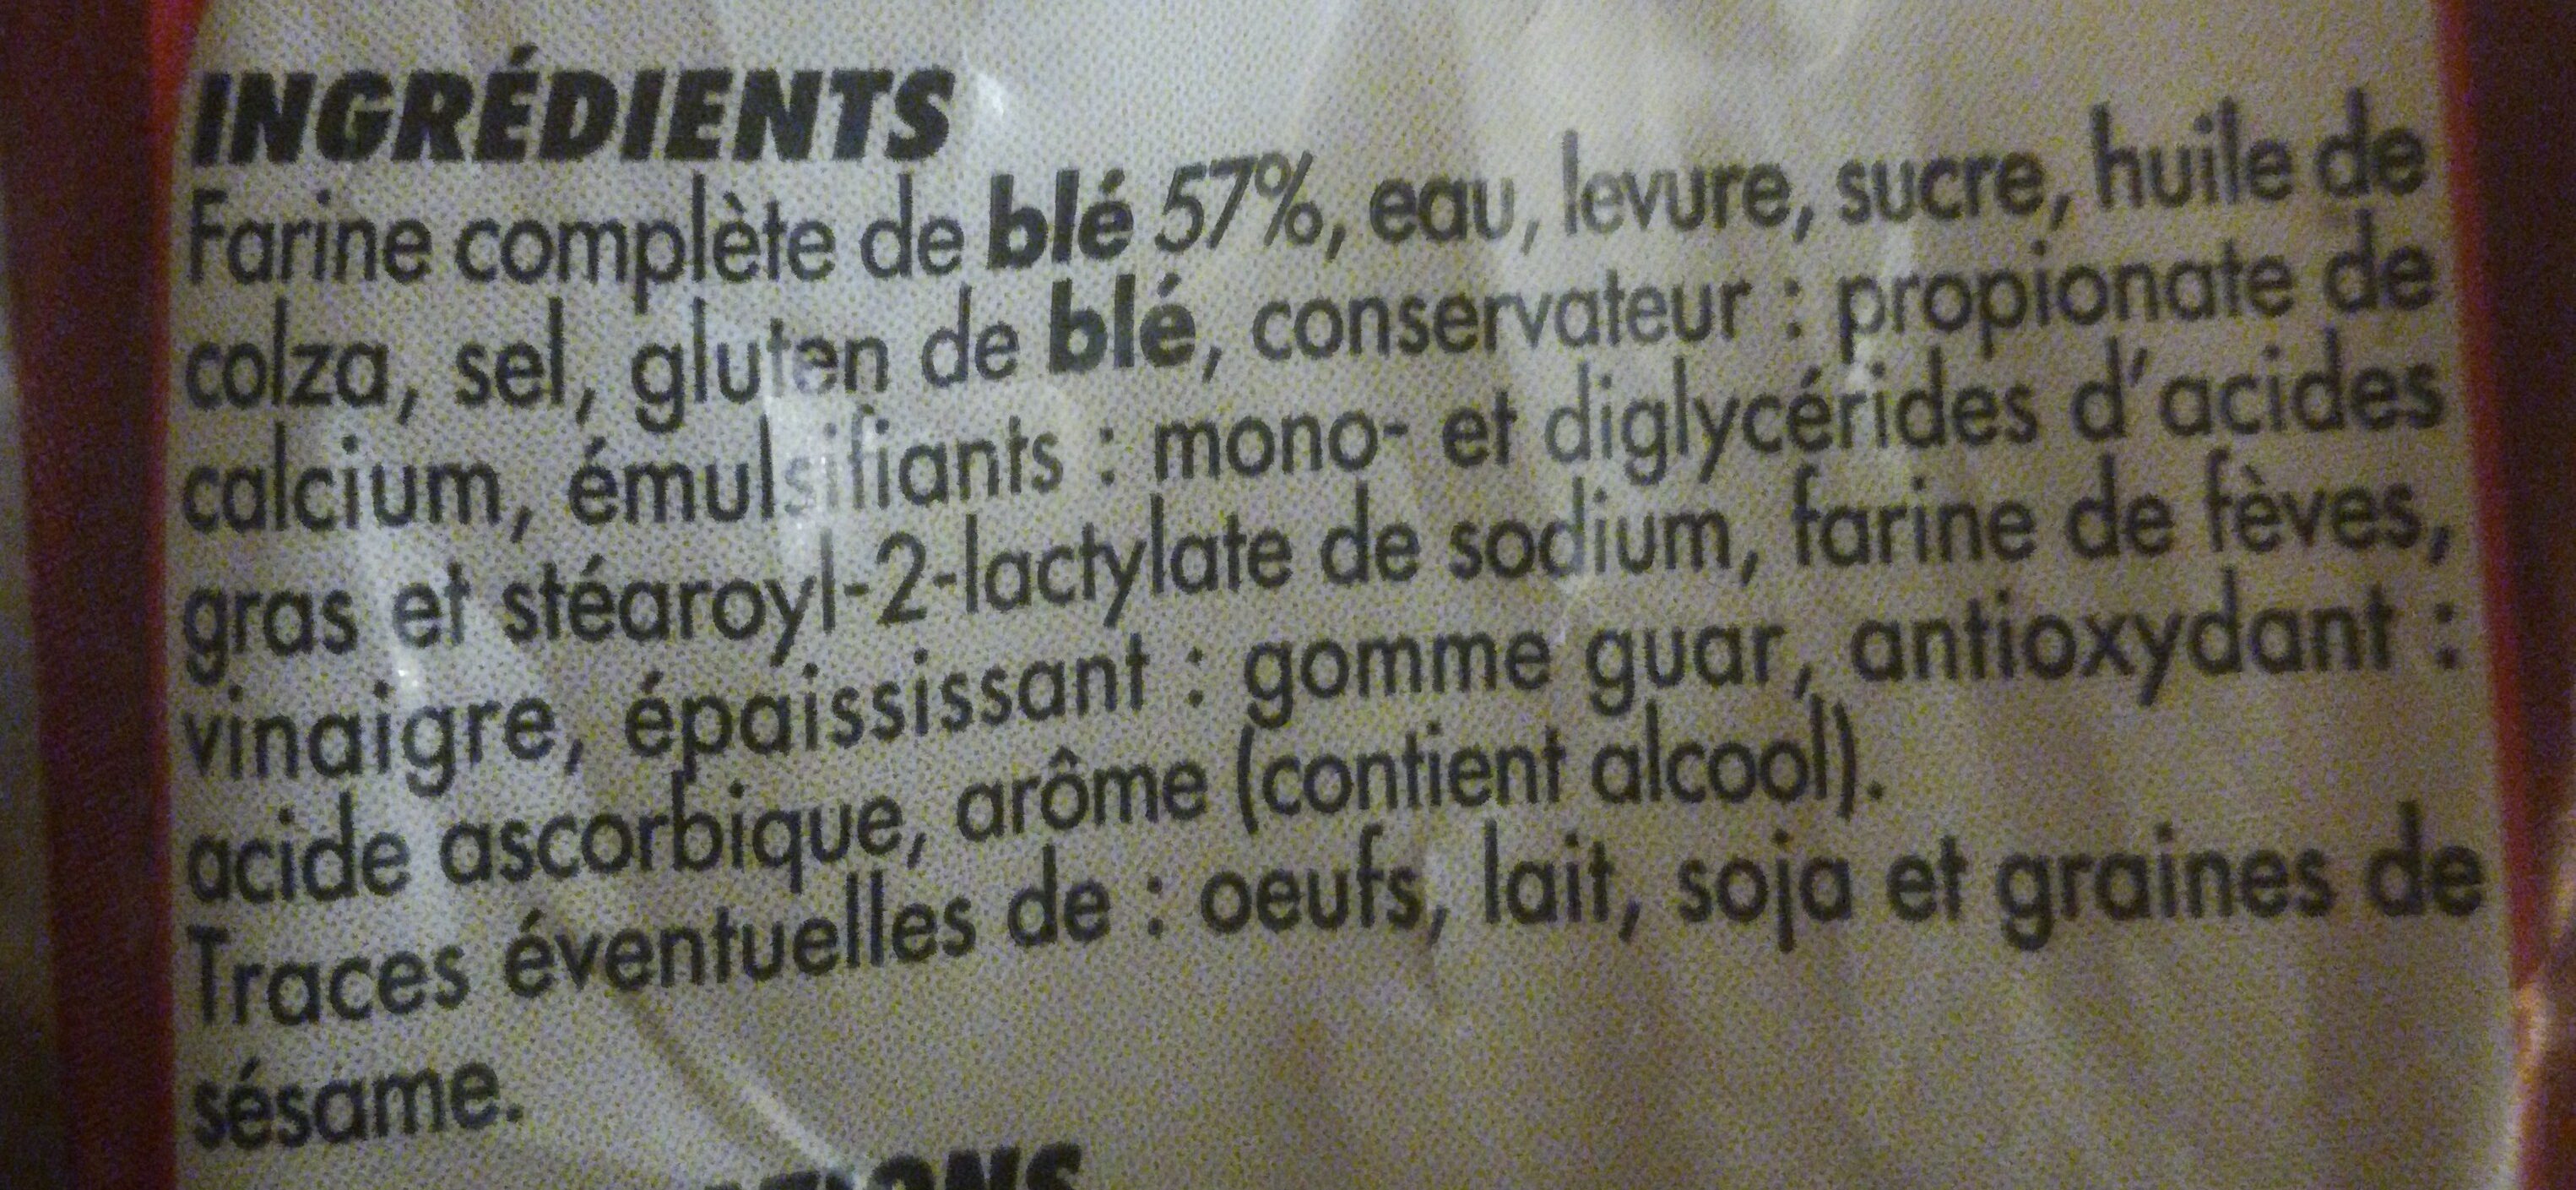 Pain sandwich complet - Ingredients - fr